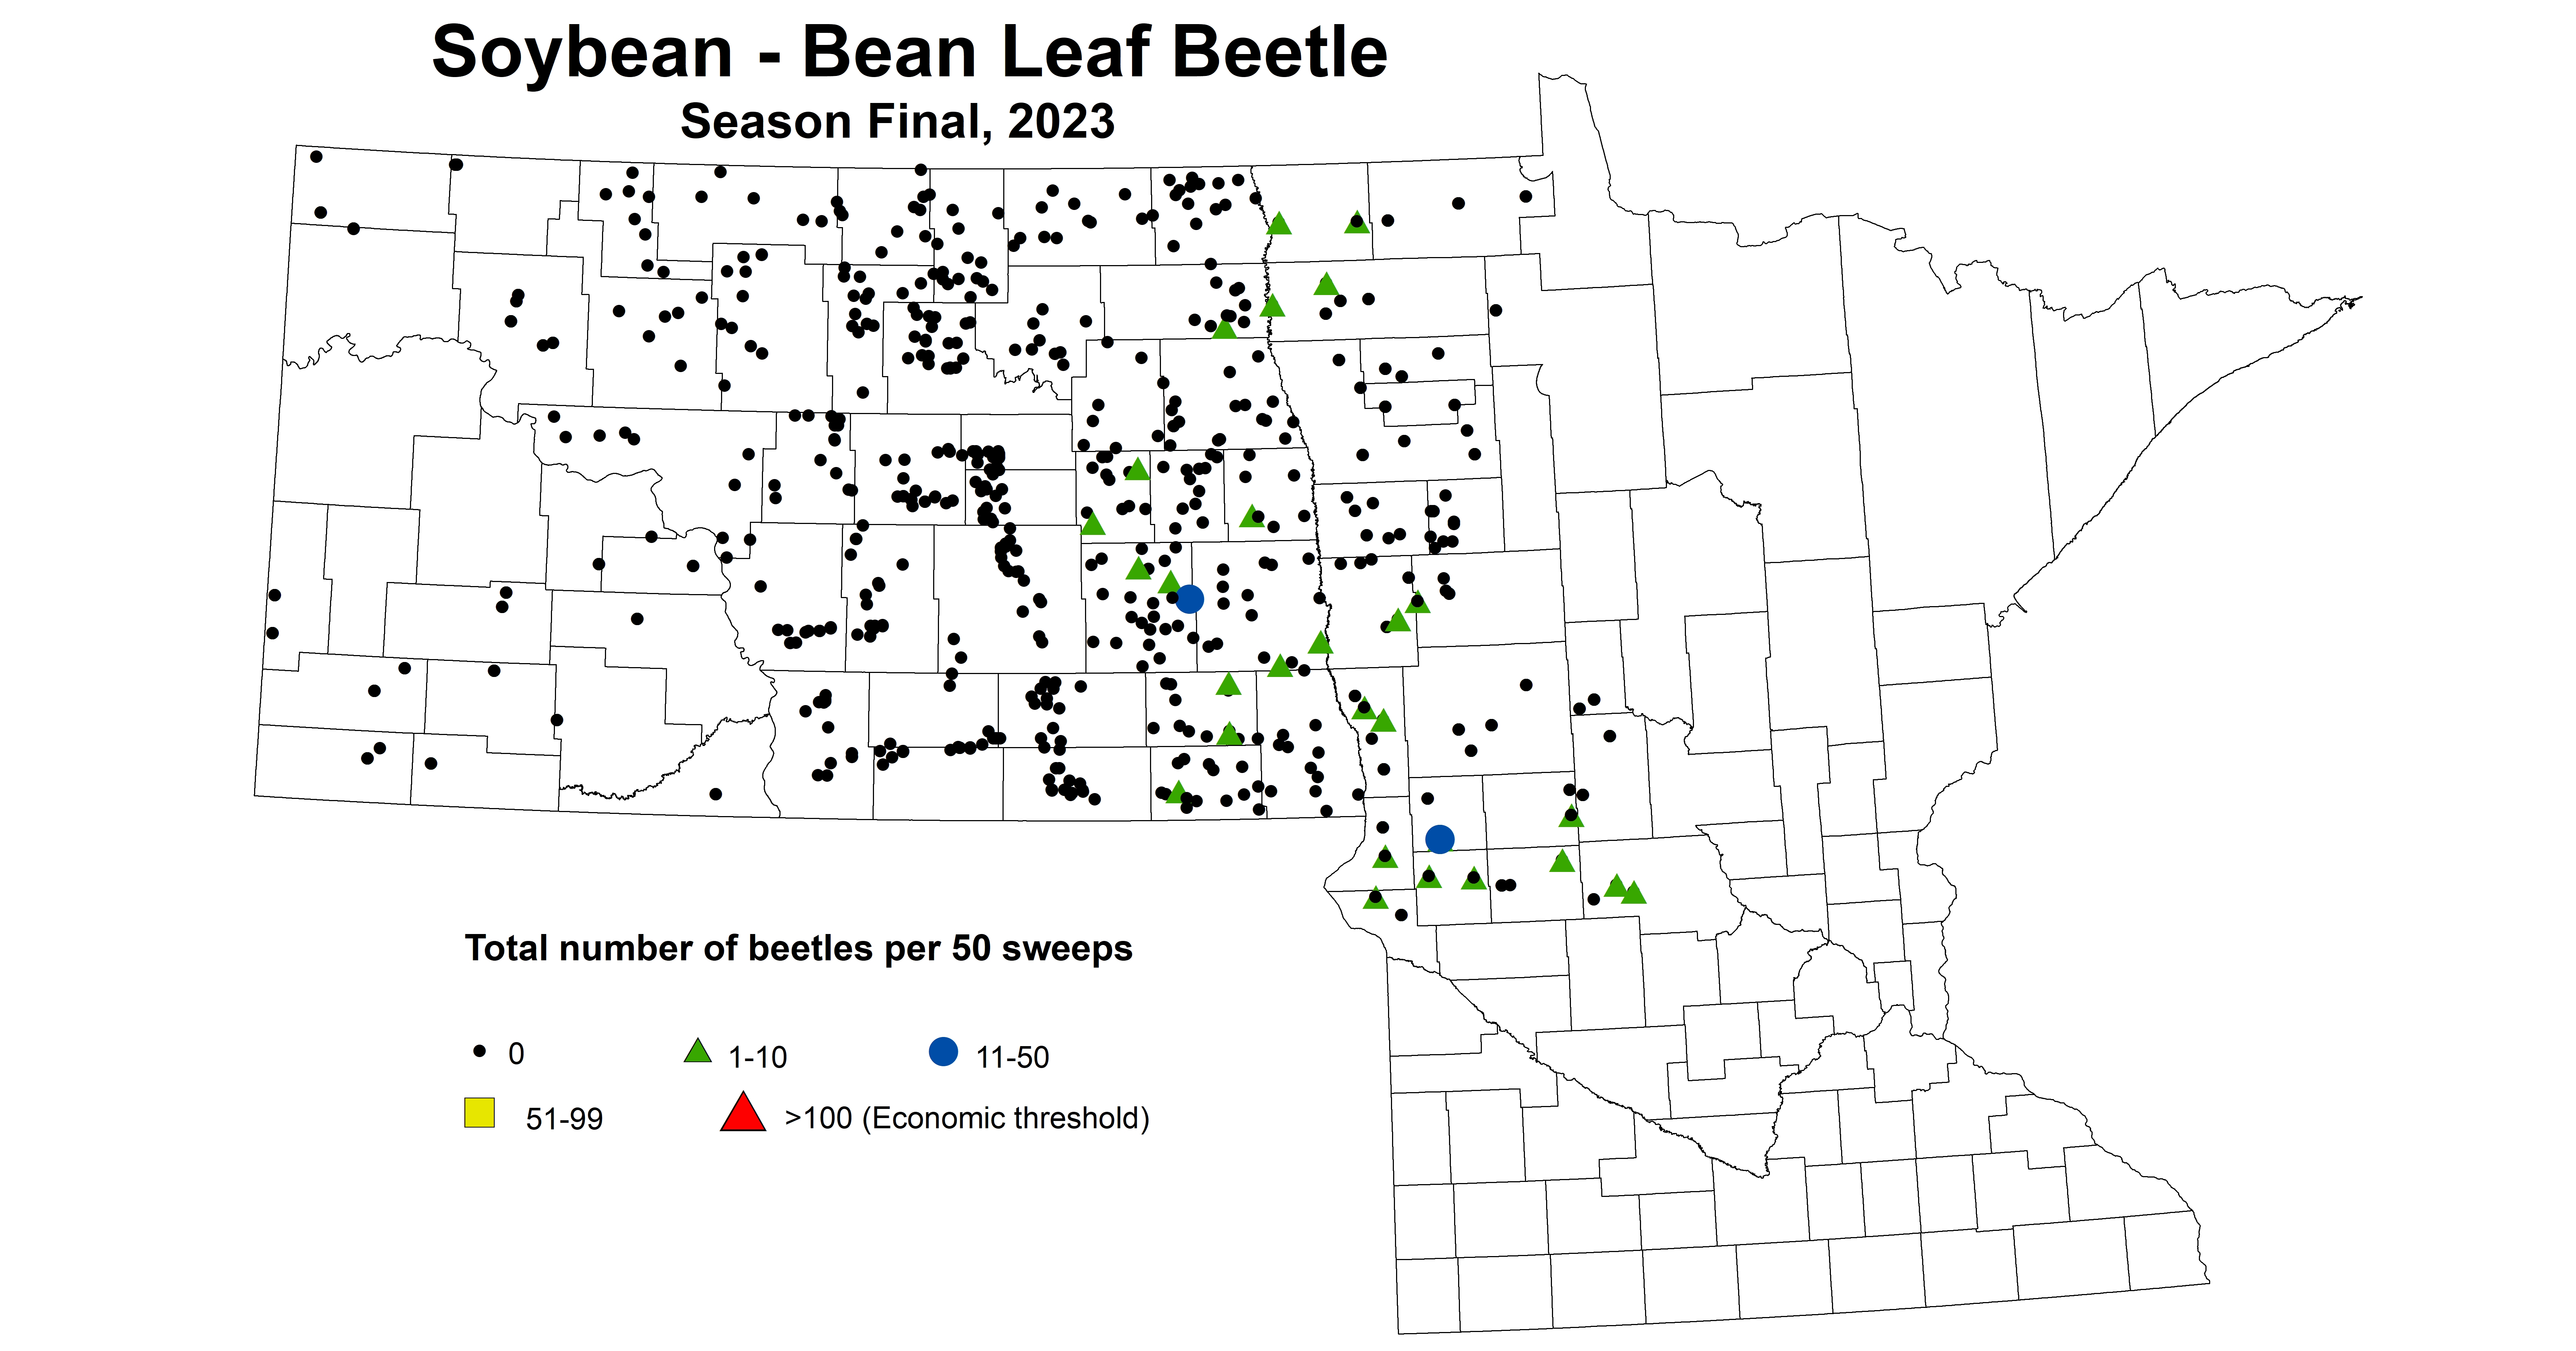 soybean BLB beetles per 50 sweeps season final 2023